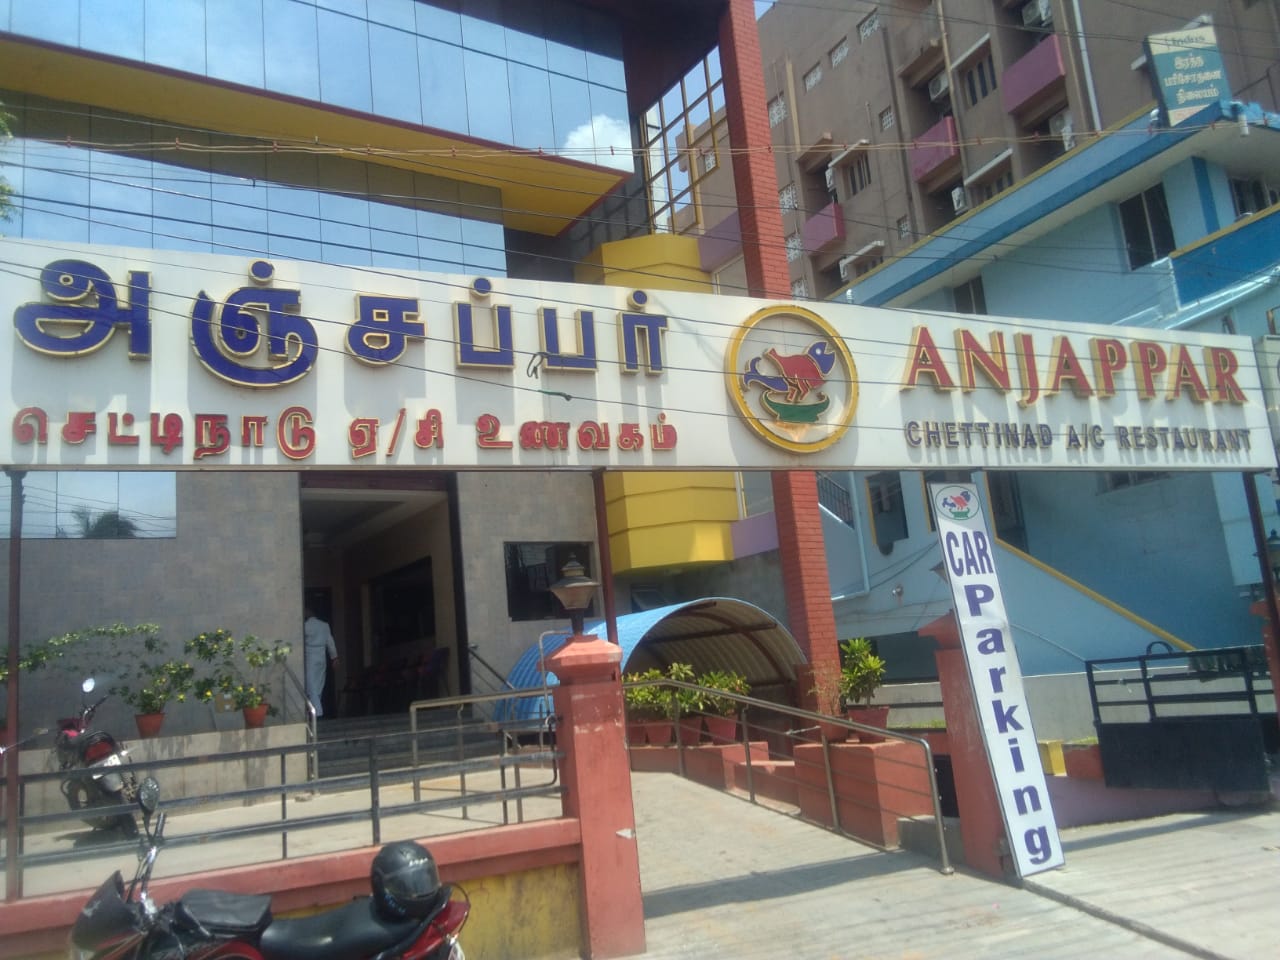 Anjappar Chettinad A/C Restaurant